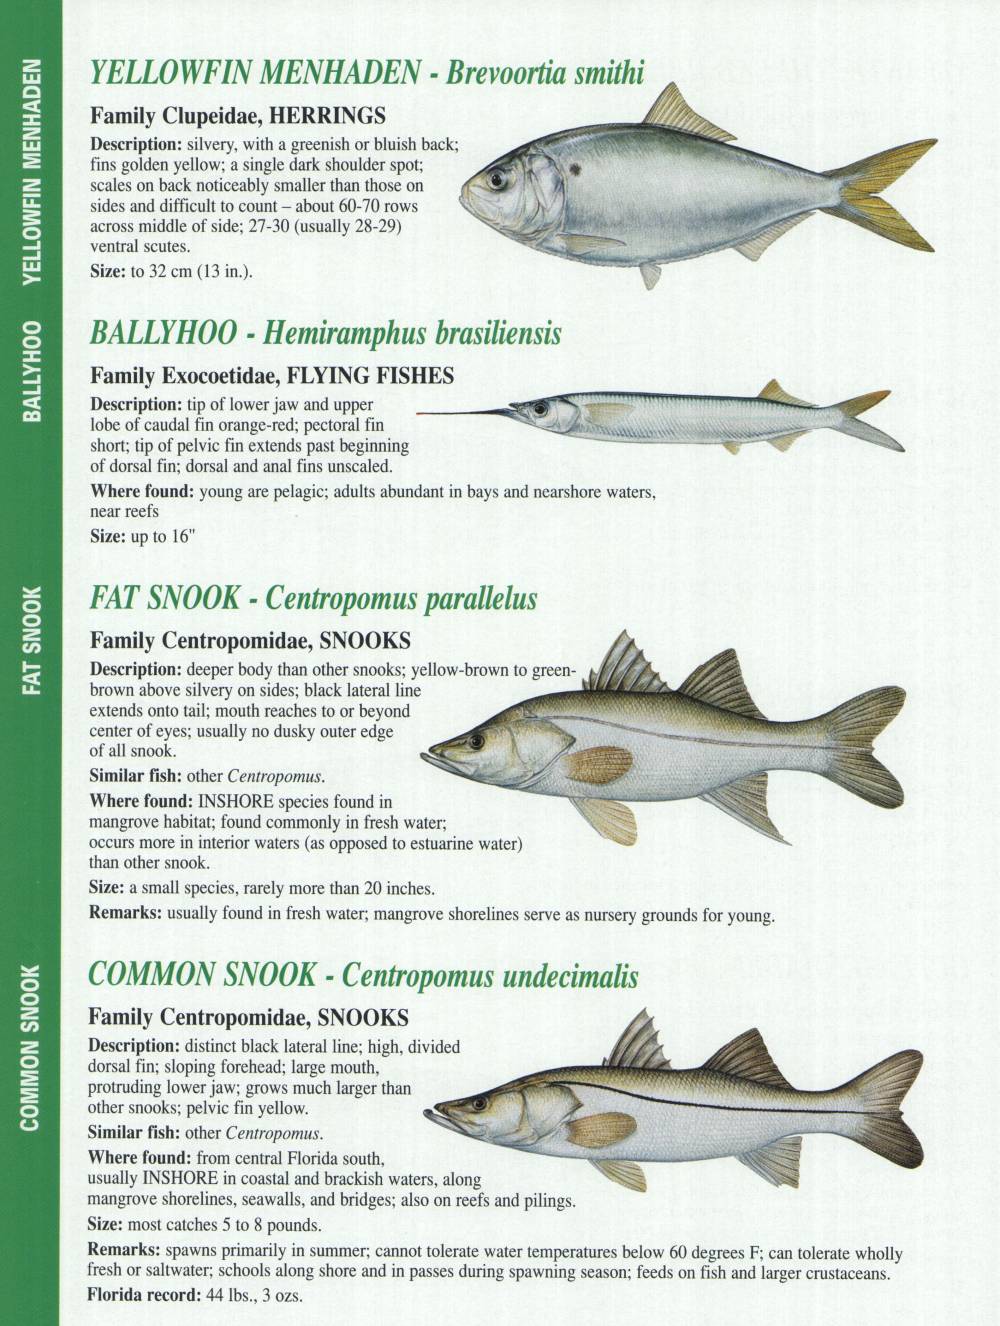 Crystal River Fishing Report: Florida Gulf Fish Identification Charts